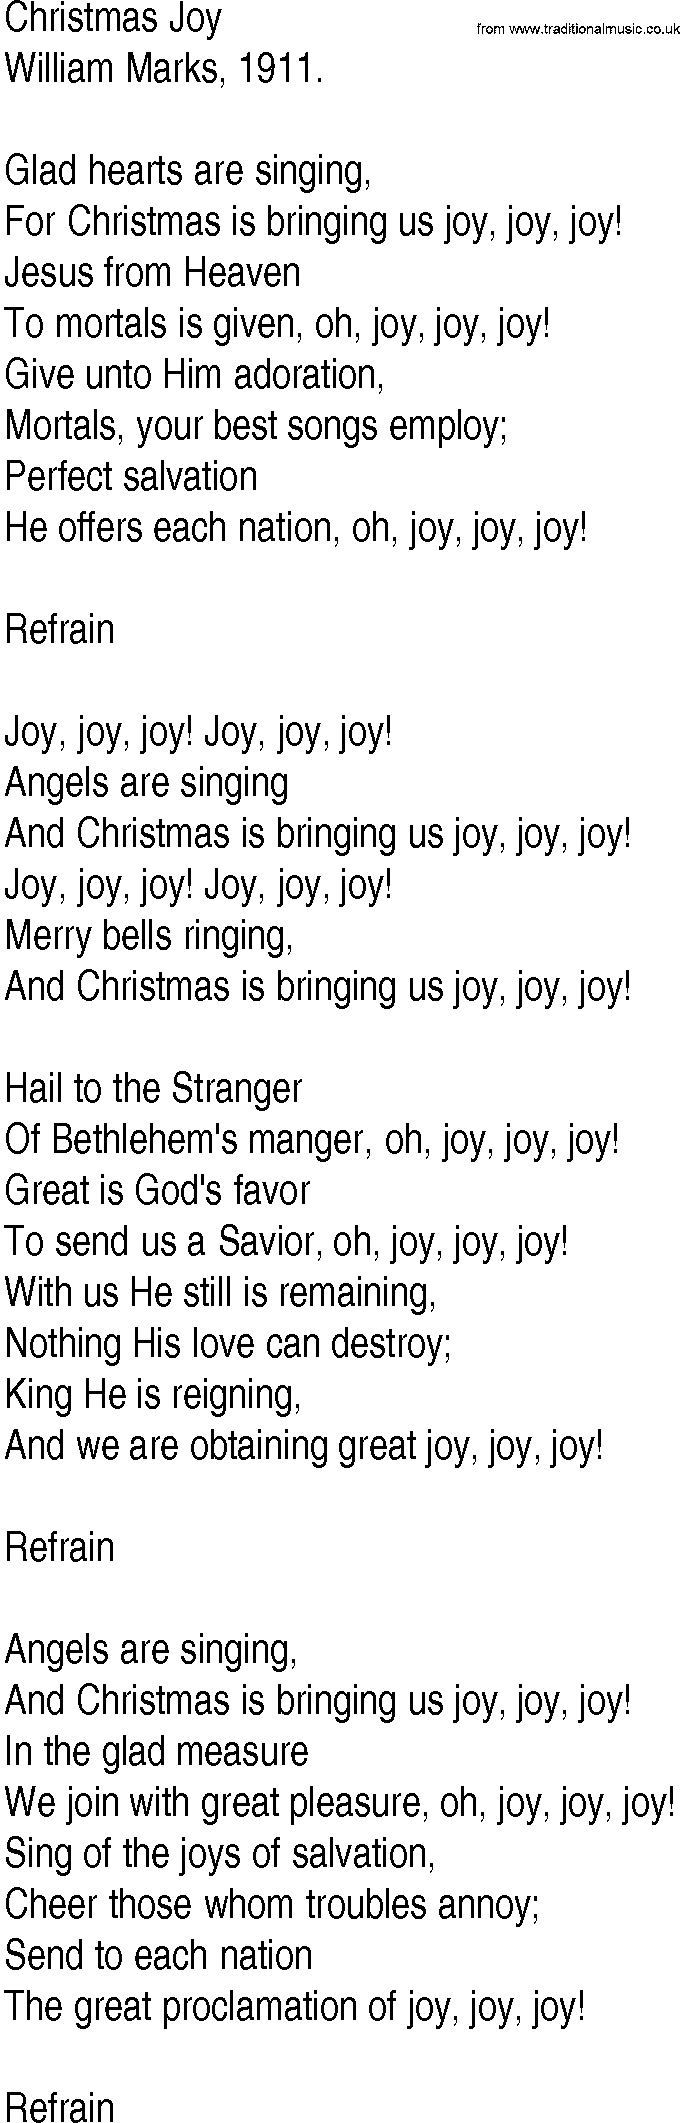 Hymn and Gospel Song: Christmas Joy by William Marks lyrics